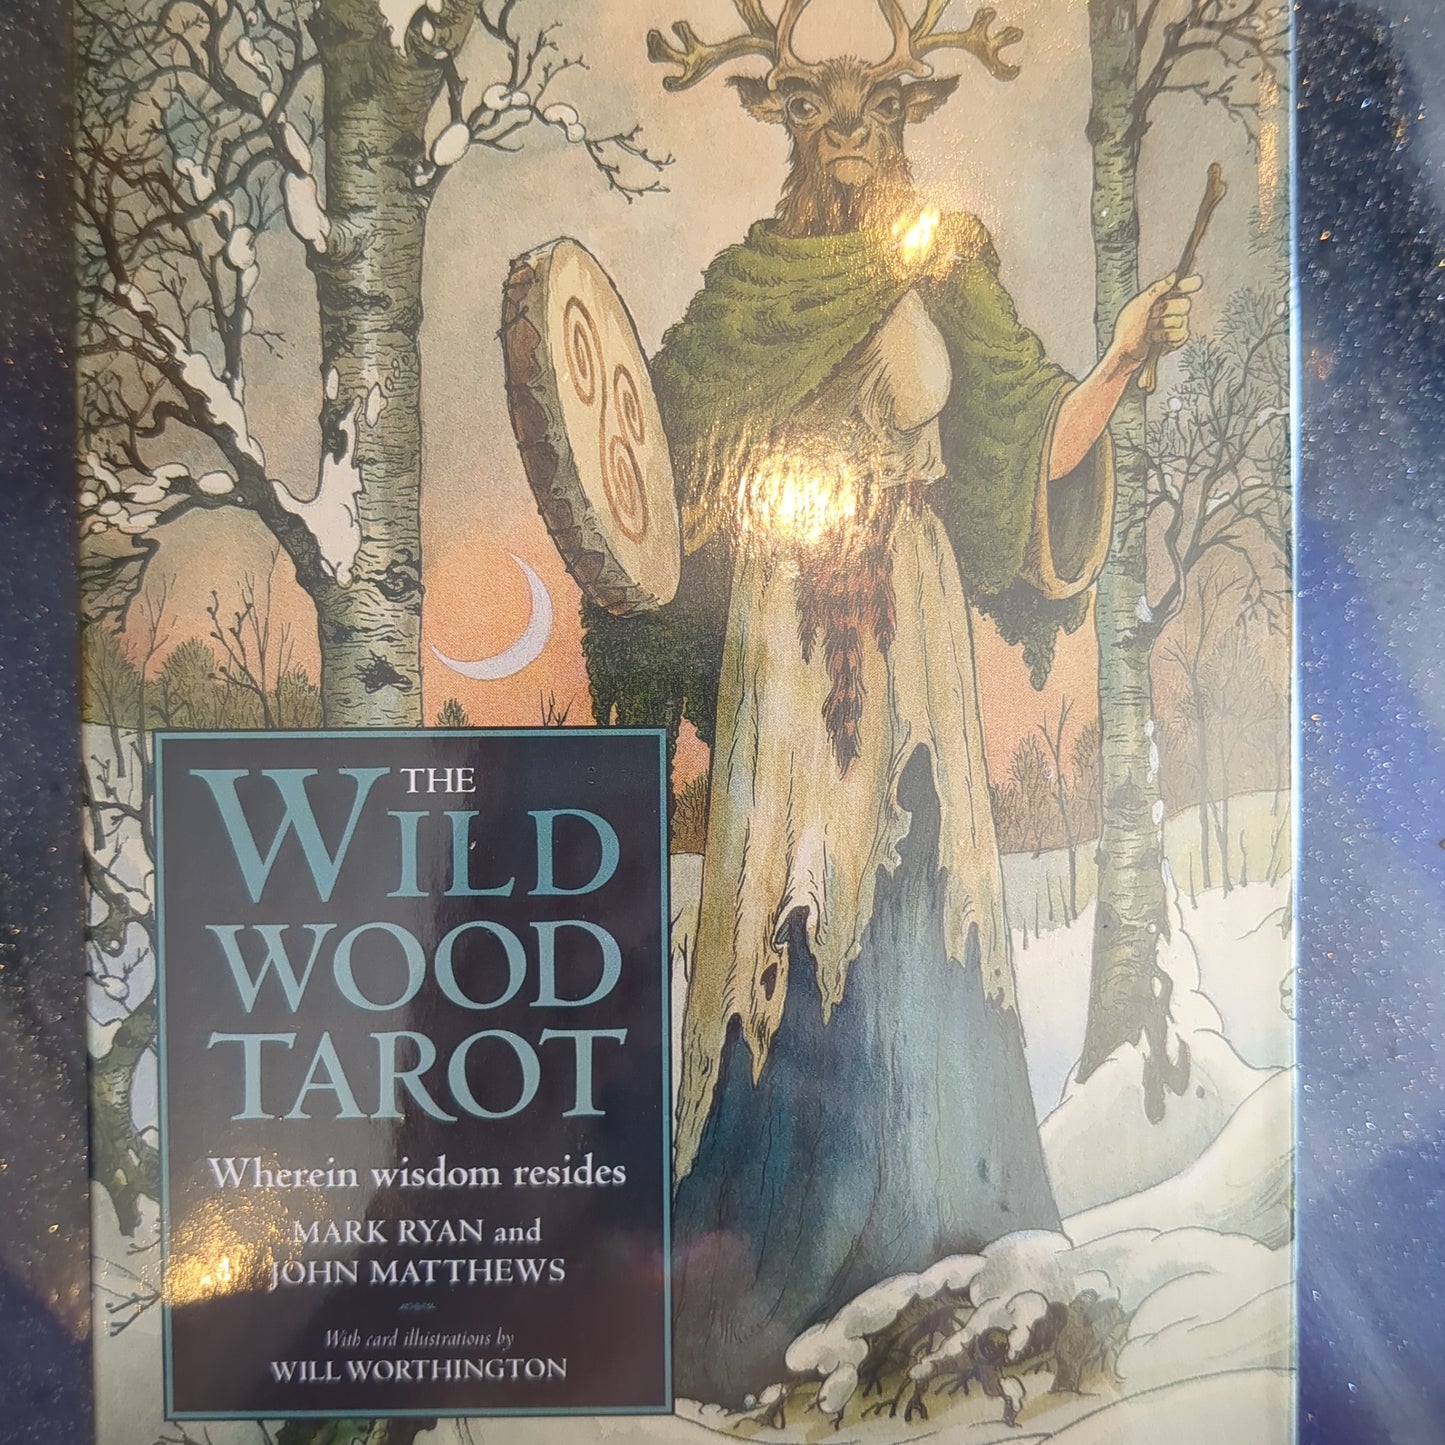 The Wildwood Tarot by Mark Ryan and John Matthews illustrated by Will Worthington